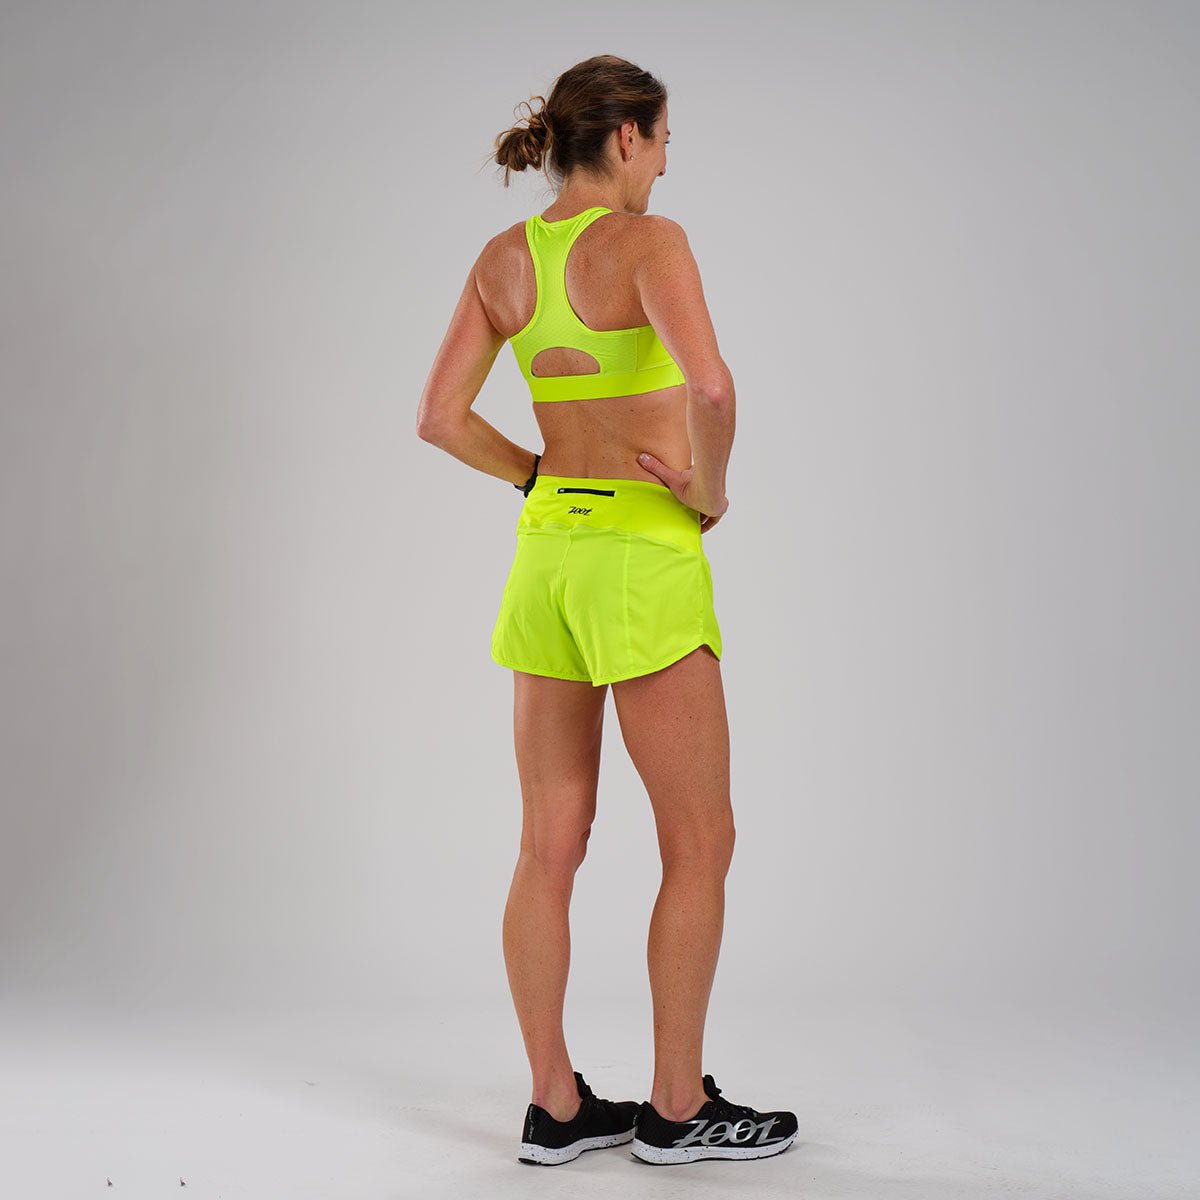 Runner Island Women Neon Lime Green Sports Bra High Impact Running